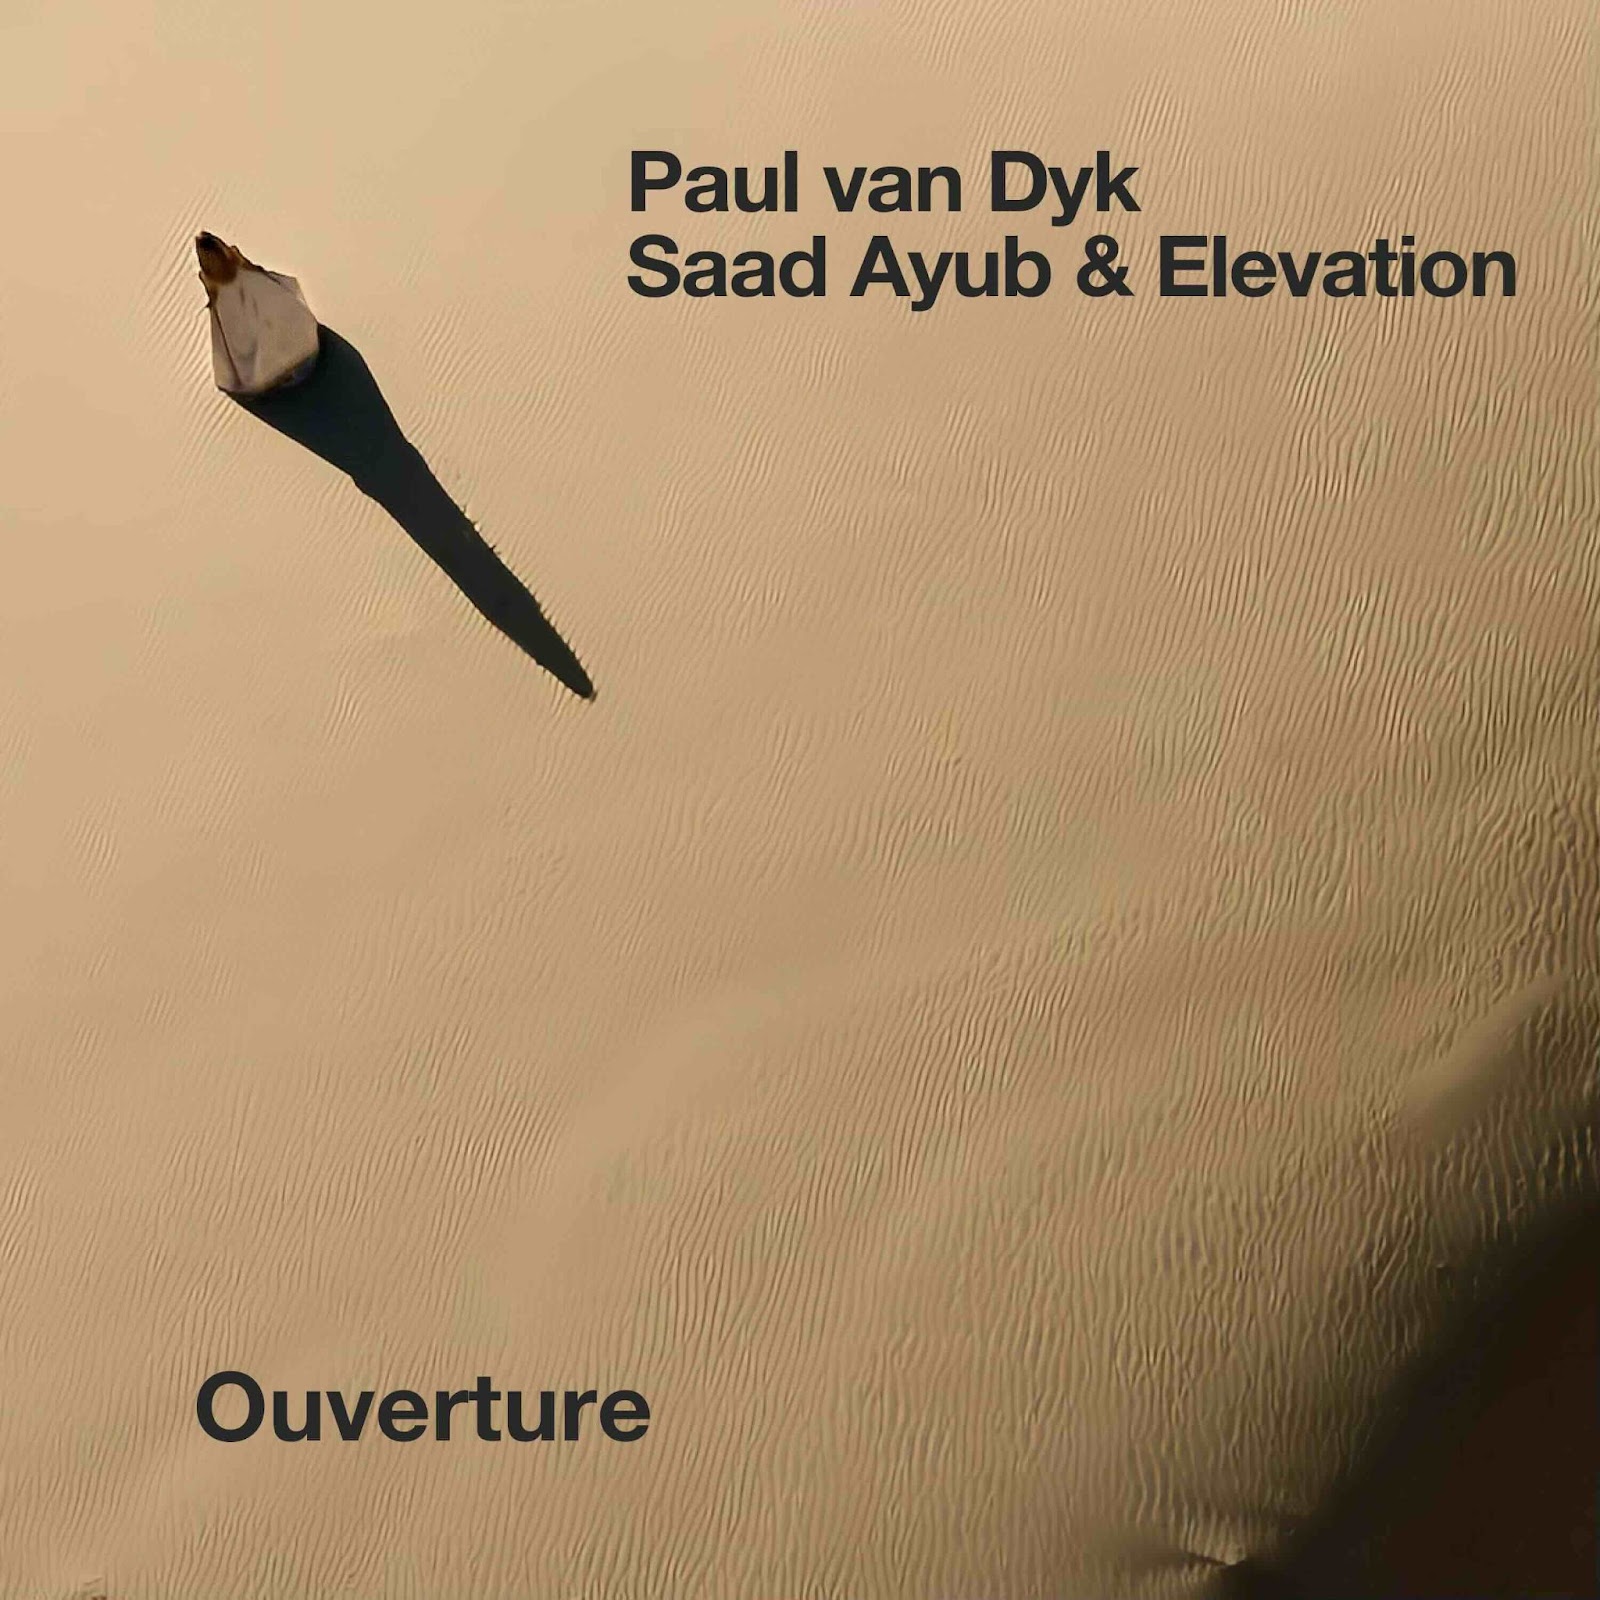 Paul van Dyk, Saad Ayub & Elevation presents Ouverture on Vandit Records